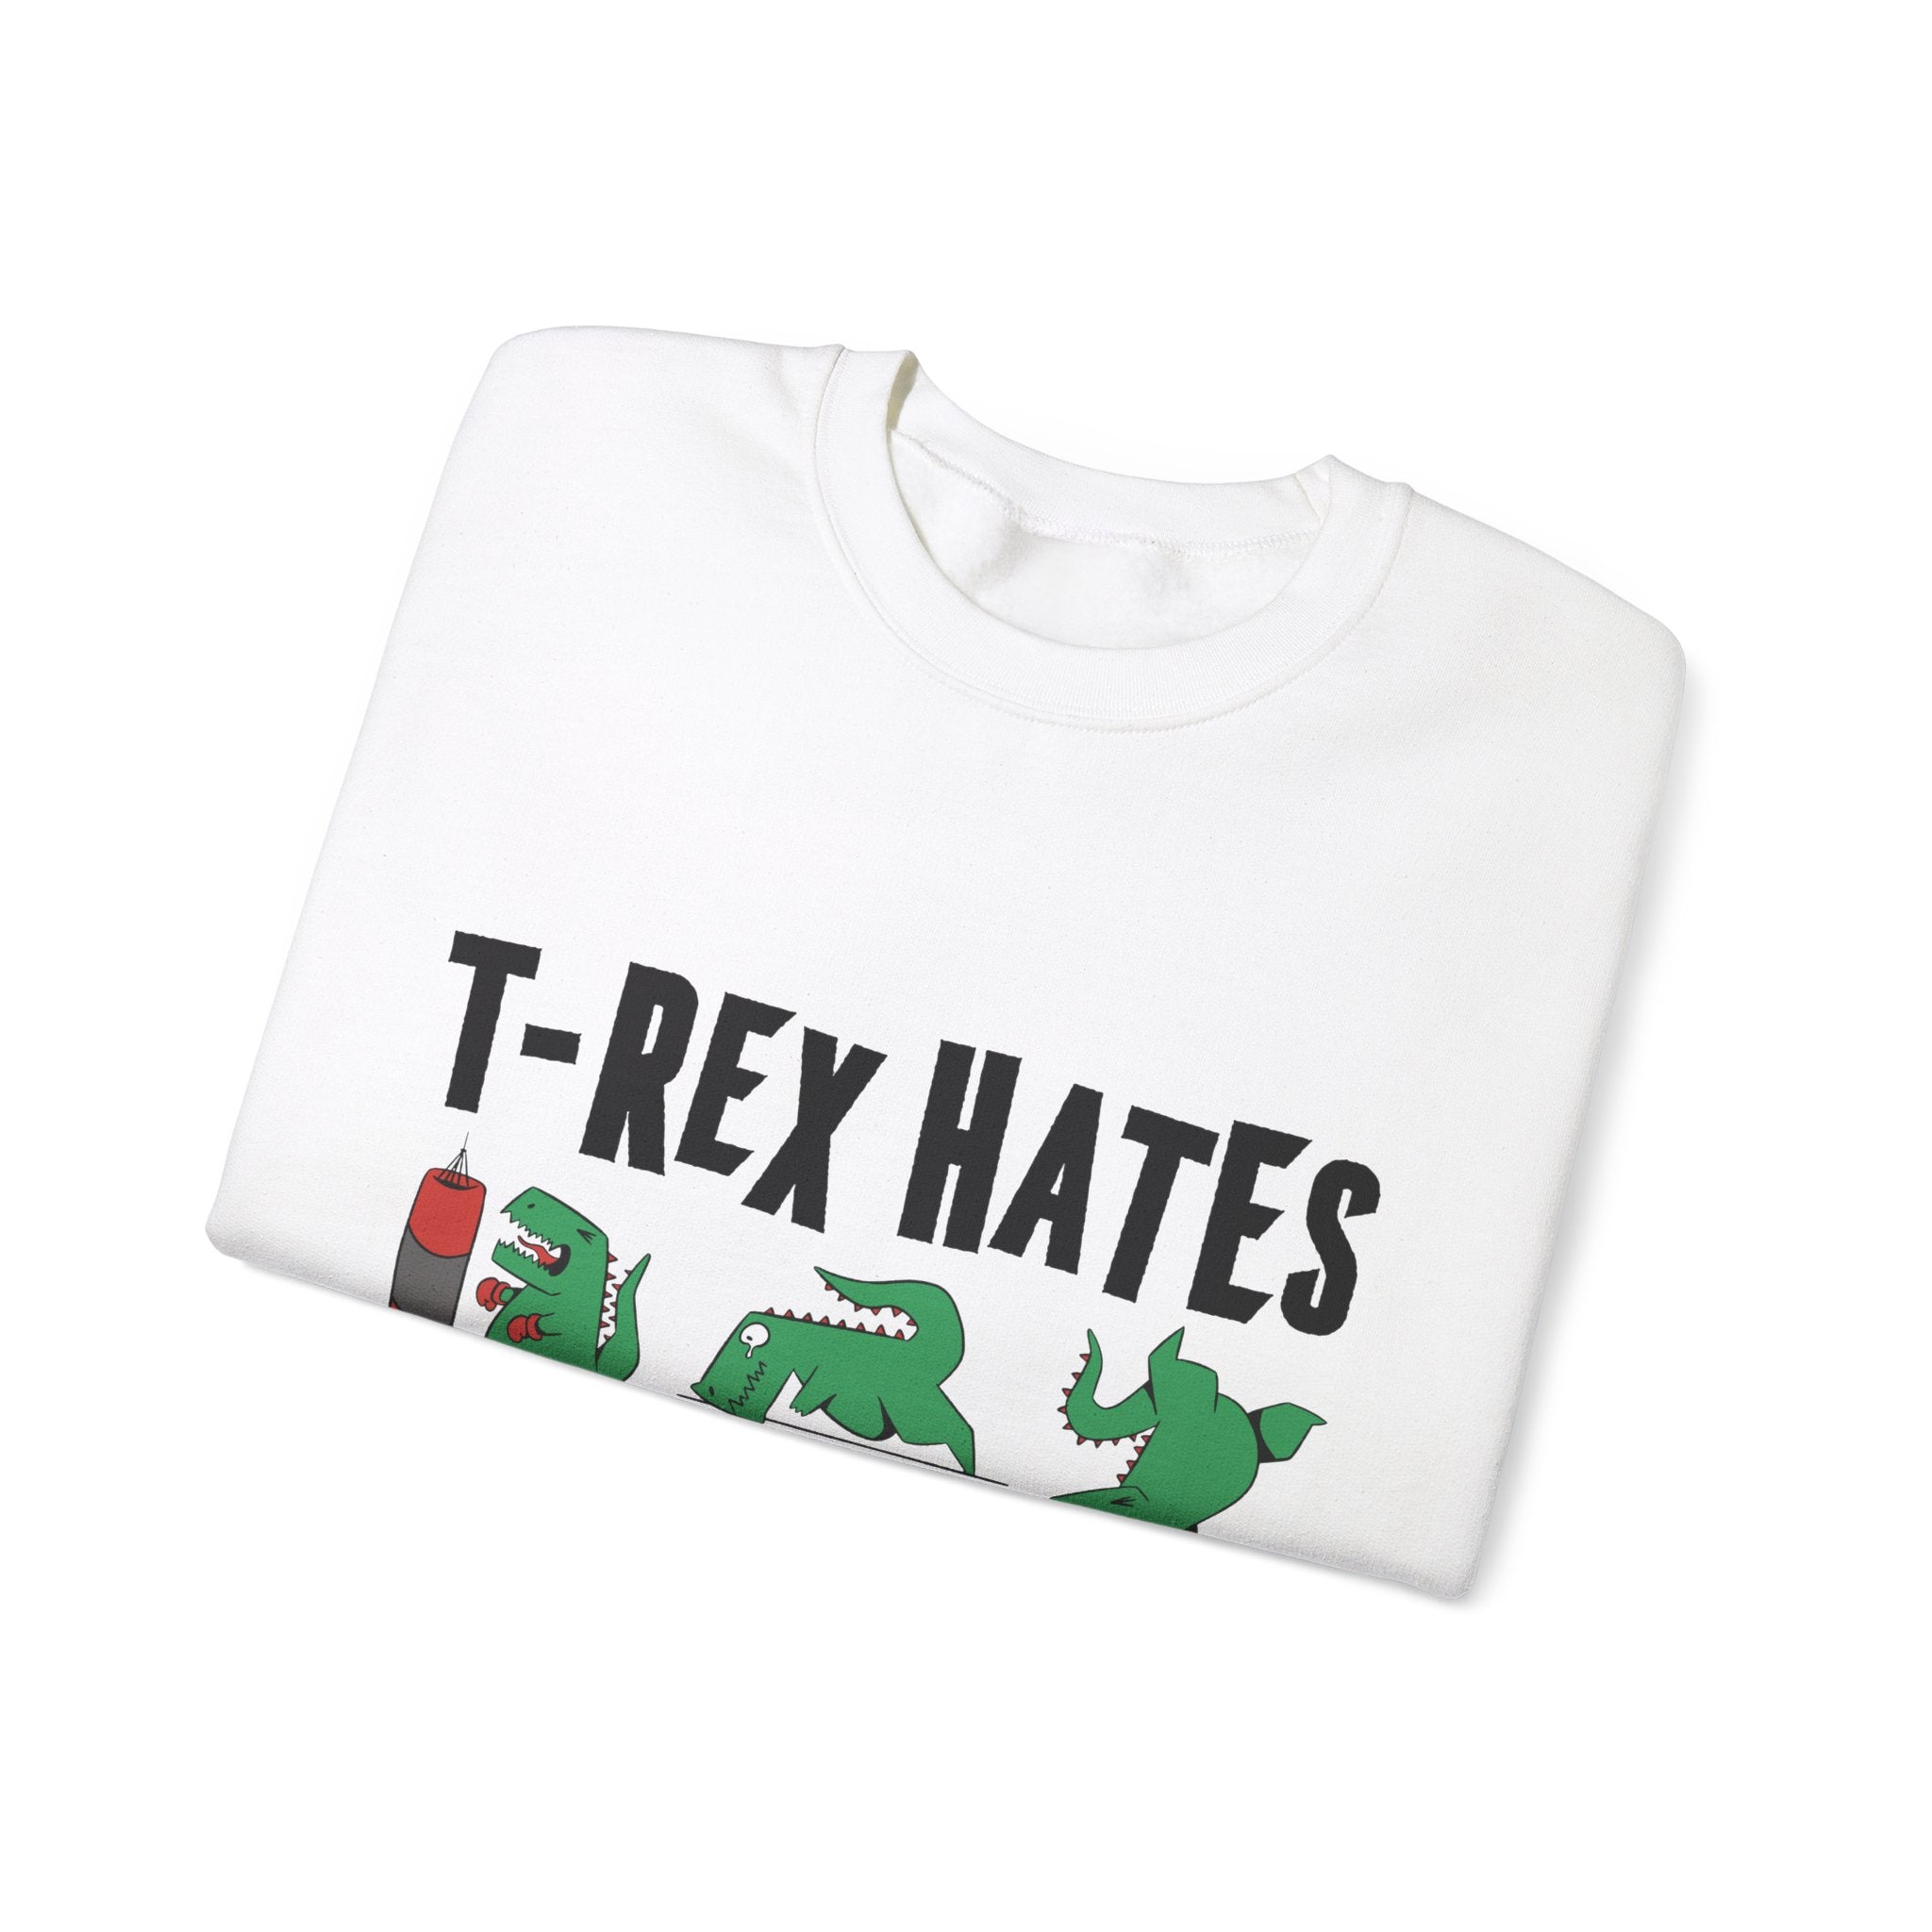 Trex Hates -  Sweatshirt